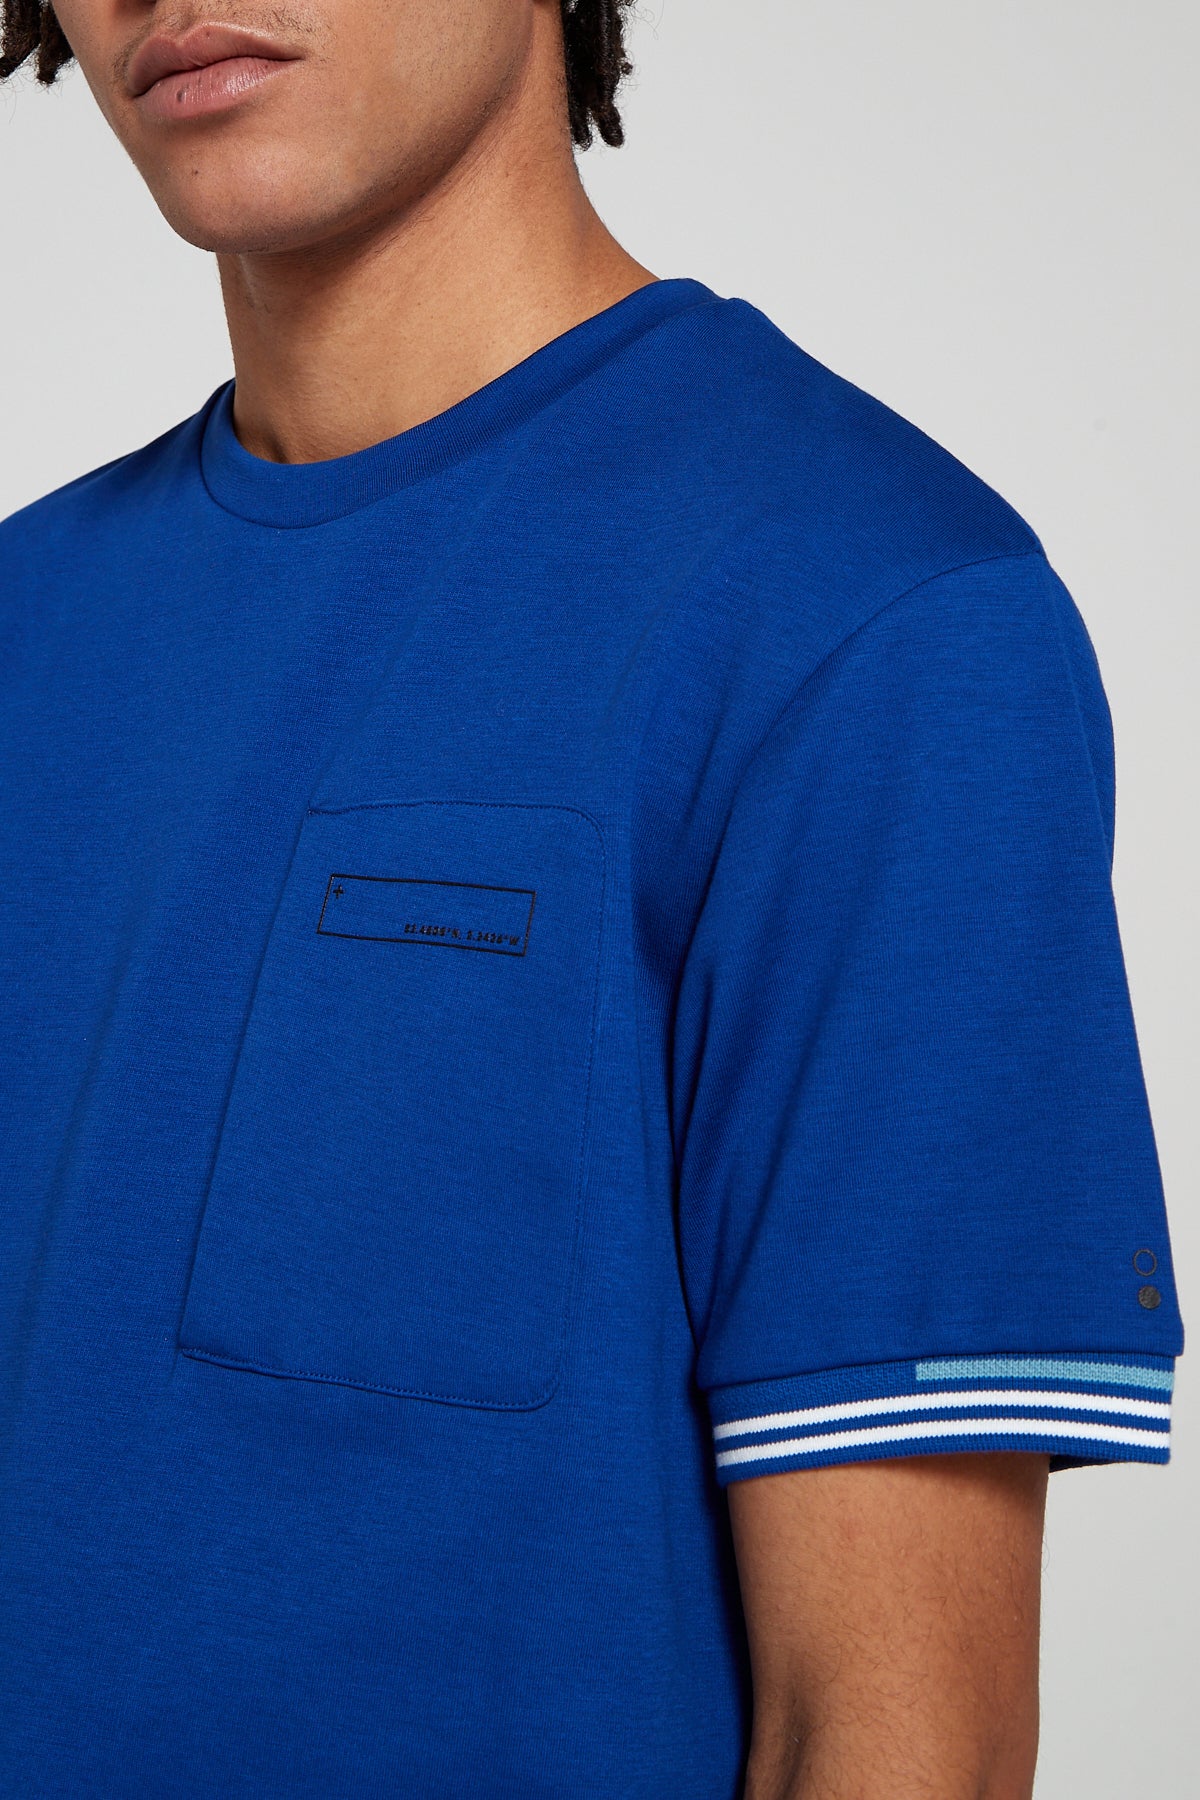 Track 2.0 Zip Pocket T-Shirt - Olympic Blue